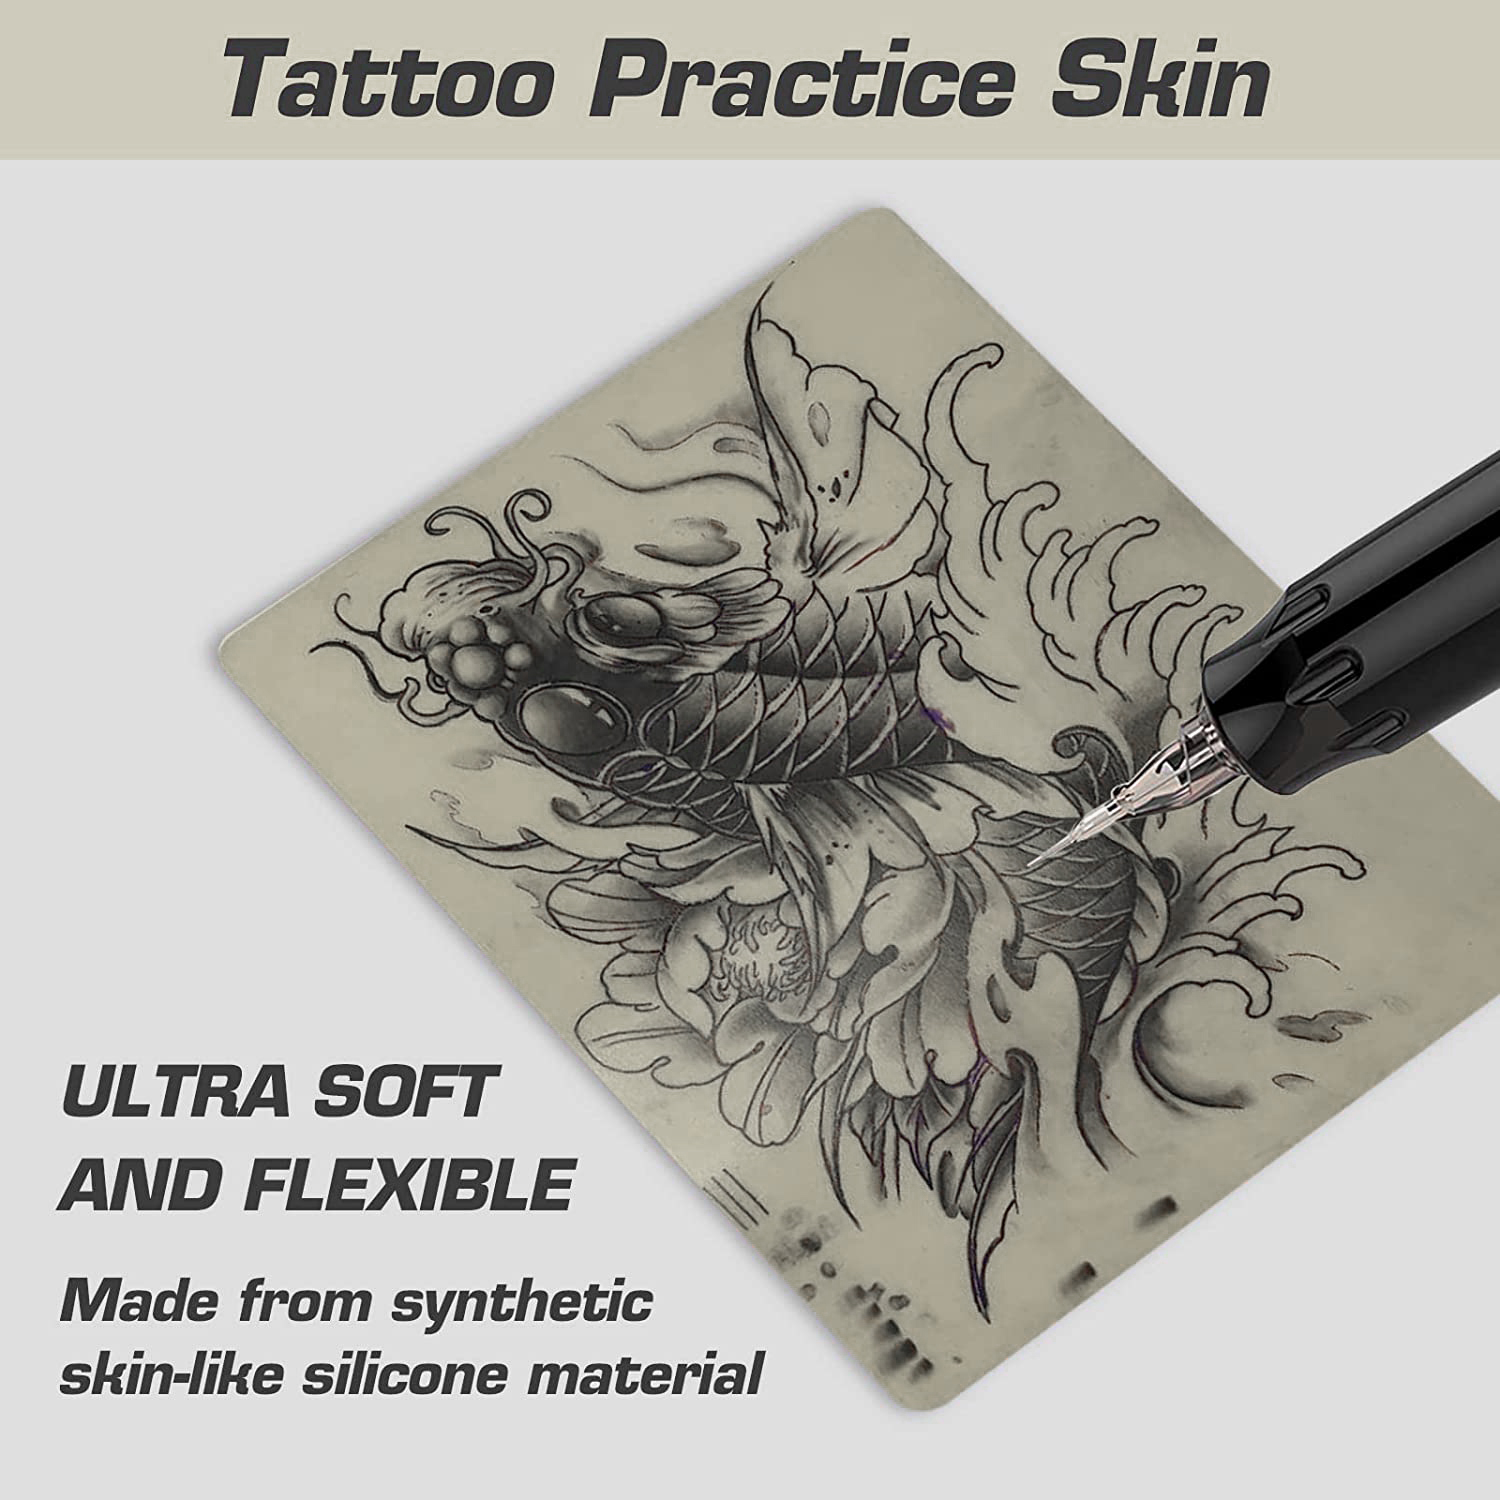 Vba Double Side Lip Tattoo Practice Skin Permanent Makeup Lip Tattoo  Training at Rs 400unit  बड टट एकससरज in Thane  ID 27027996033